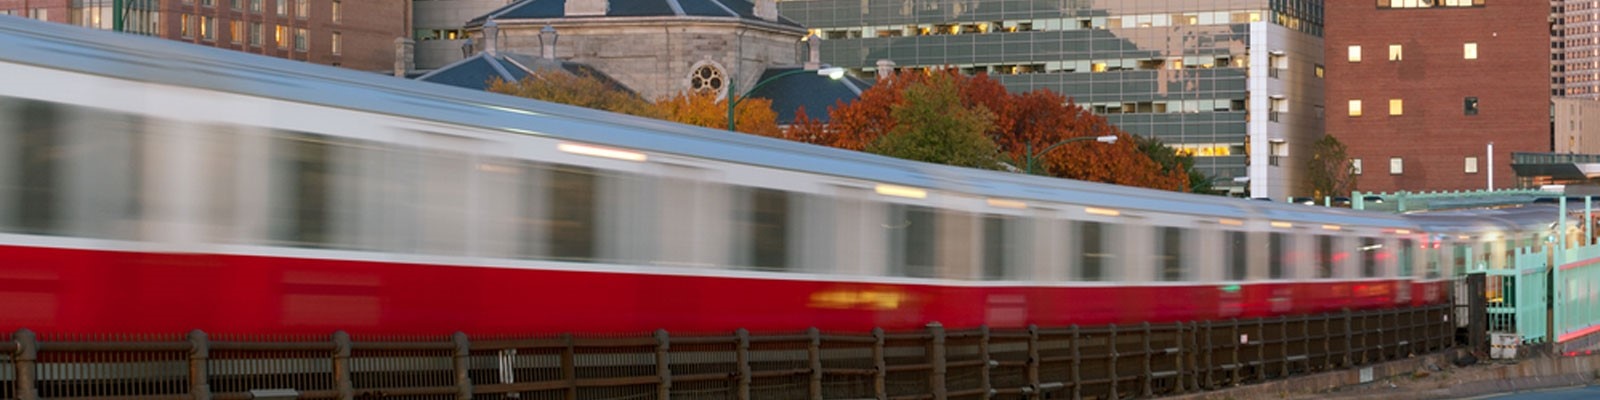 The Red Line T train in Boston